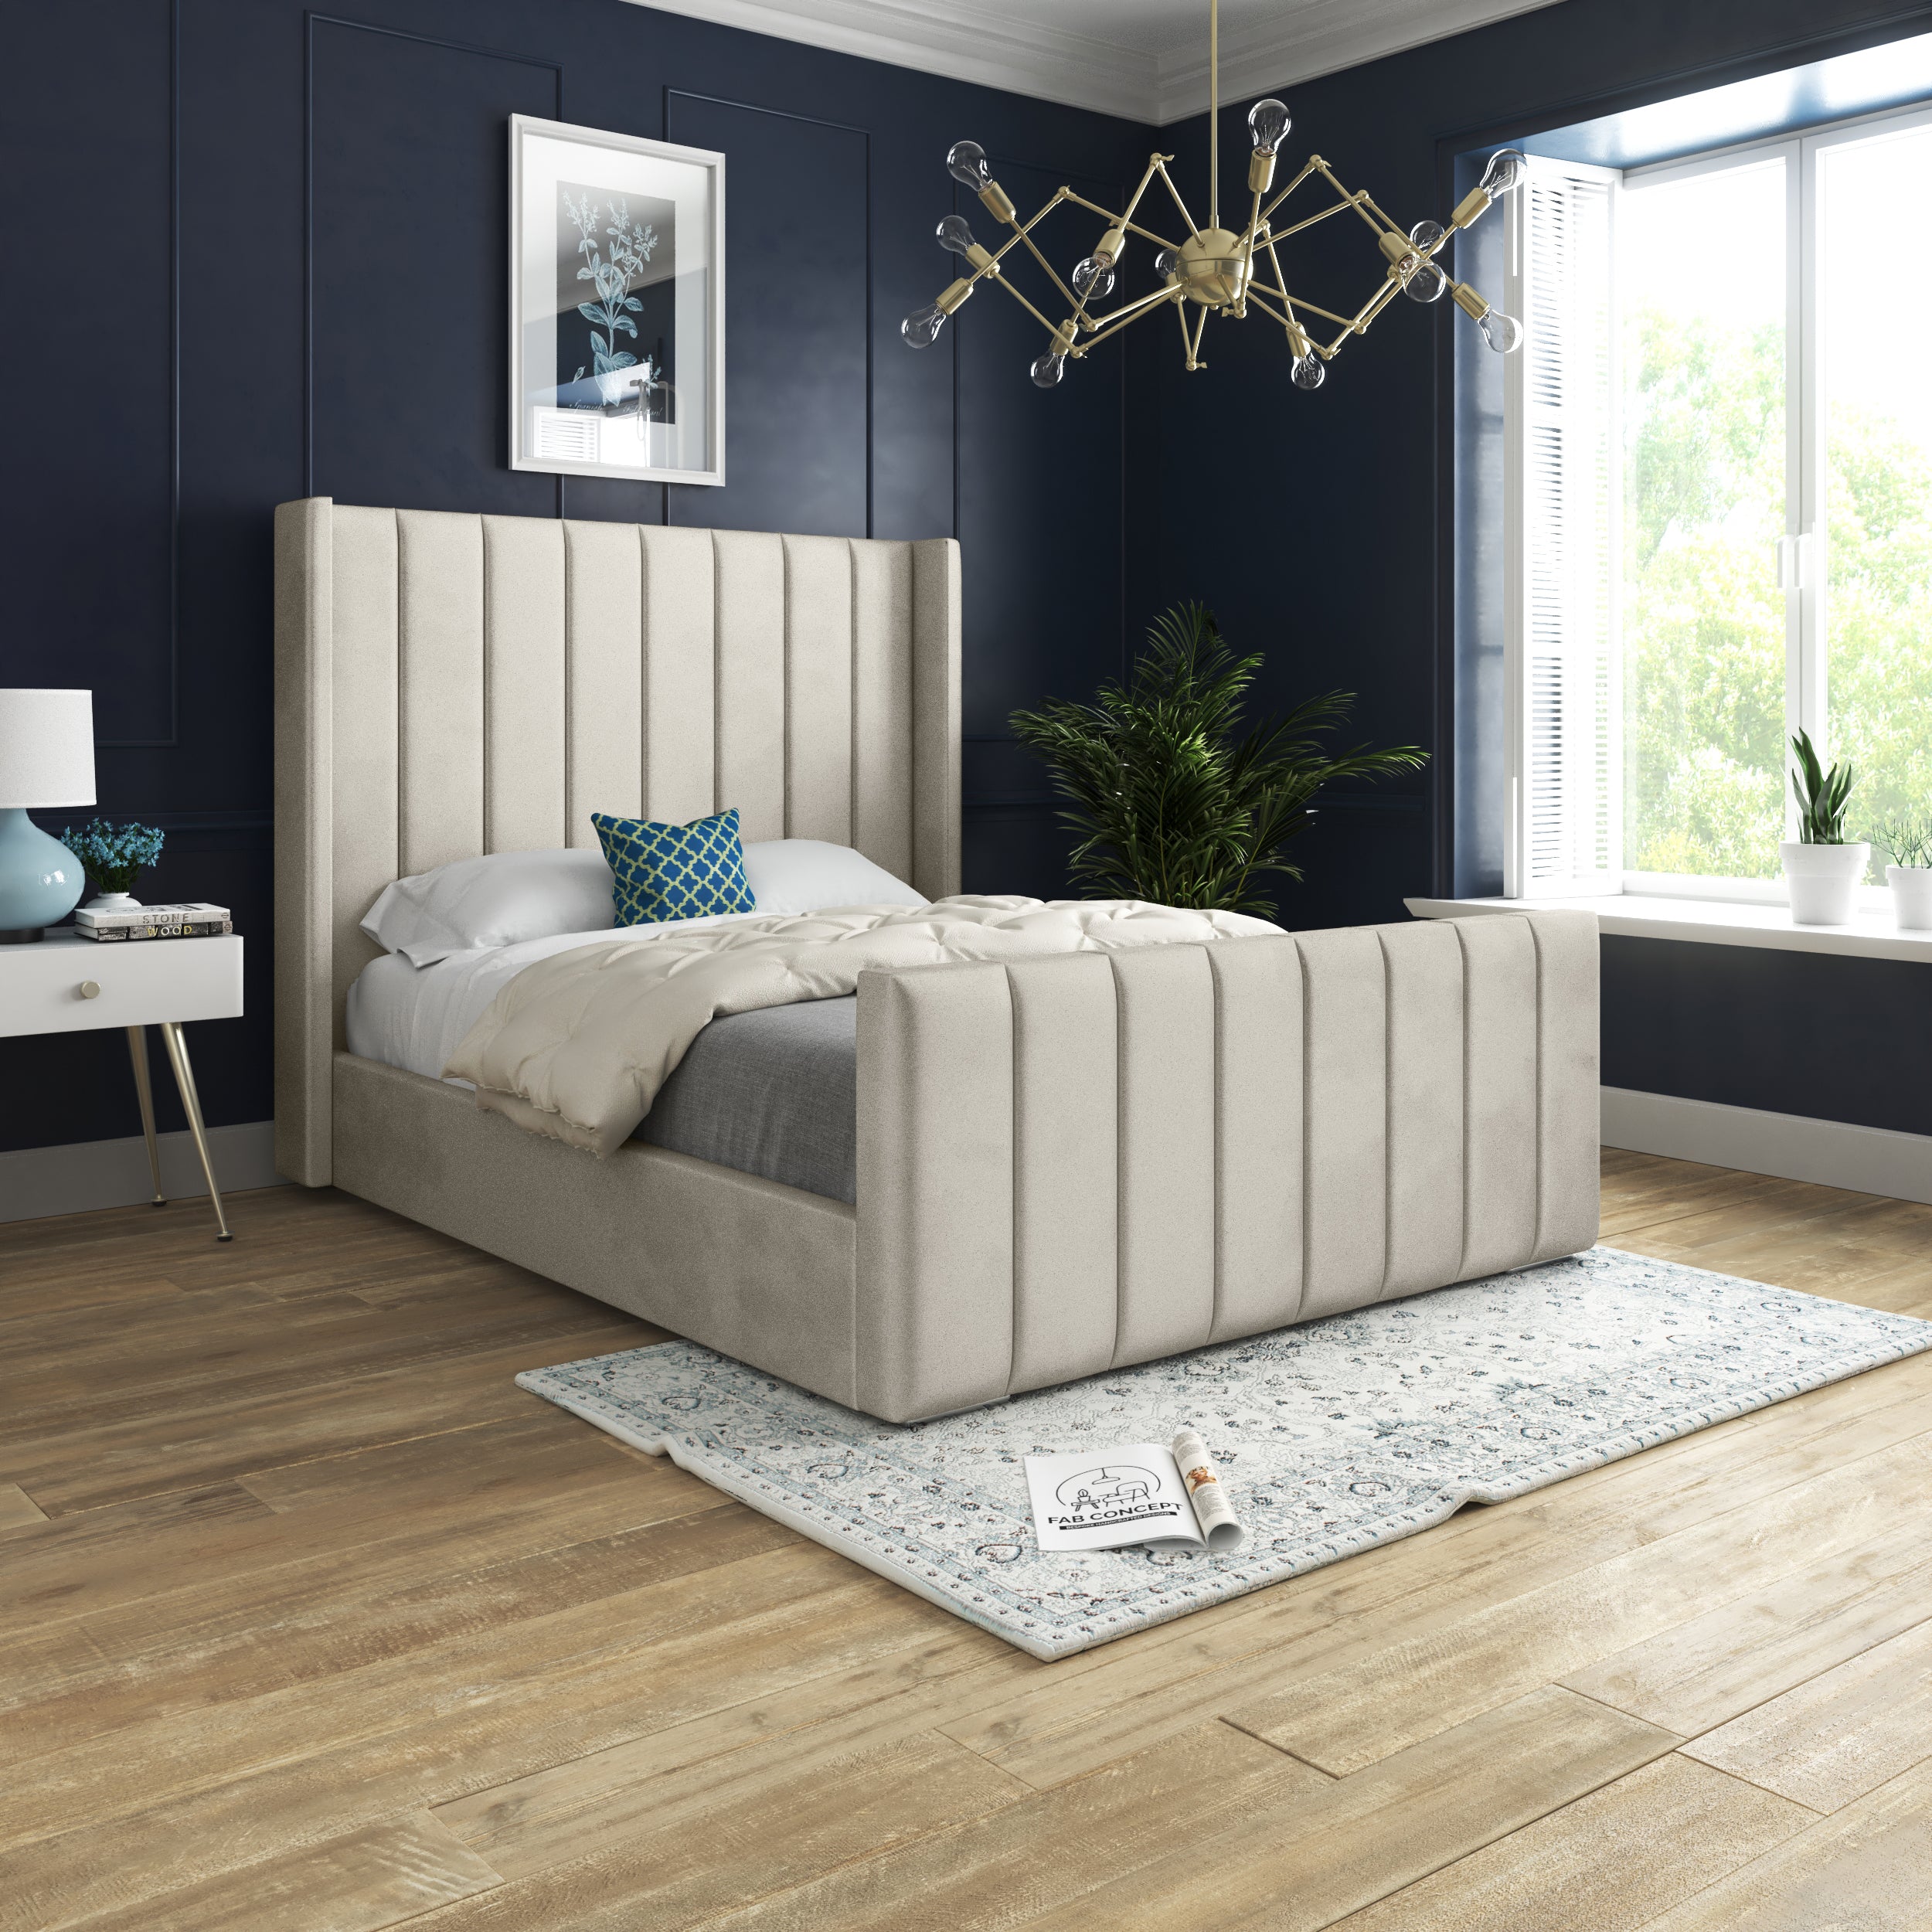 The Bespoke Alexa Bed- Fully Customisable with Storage Options- Velvet Monaco Range